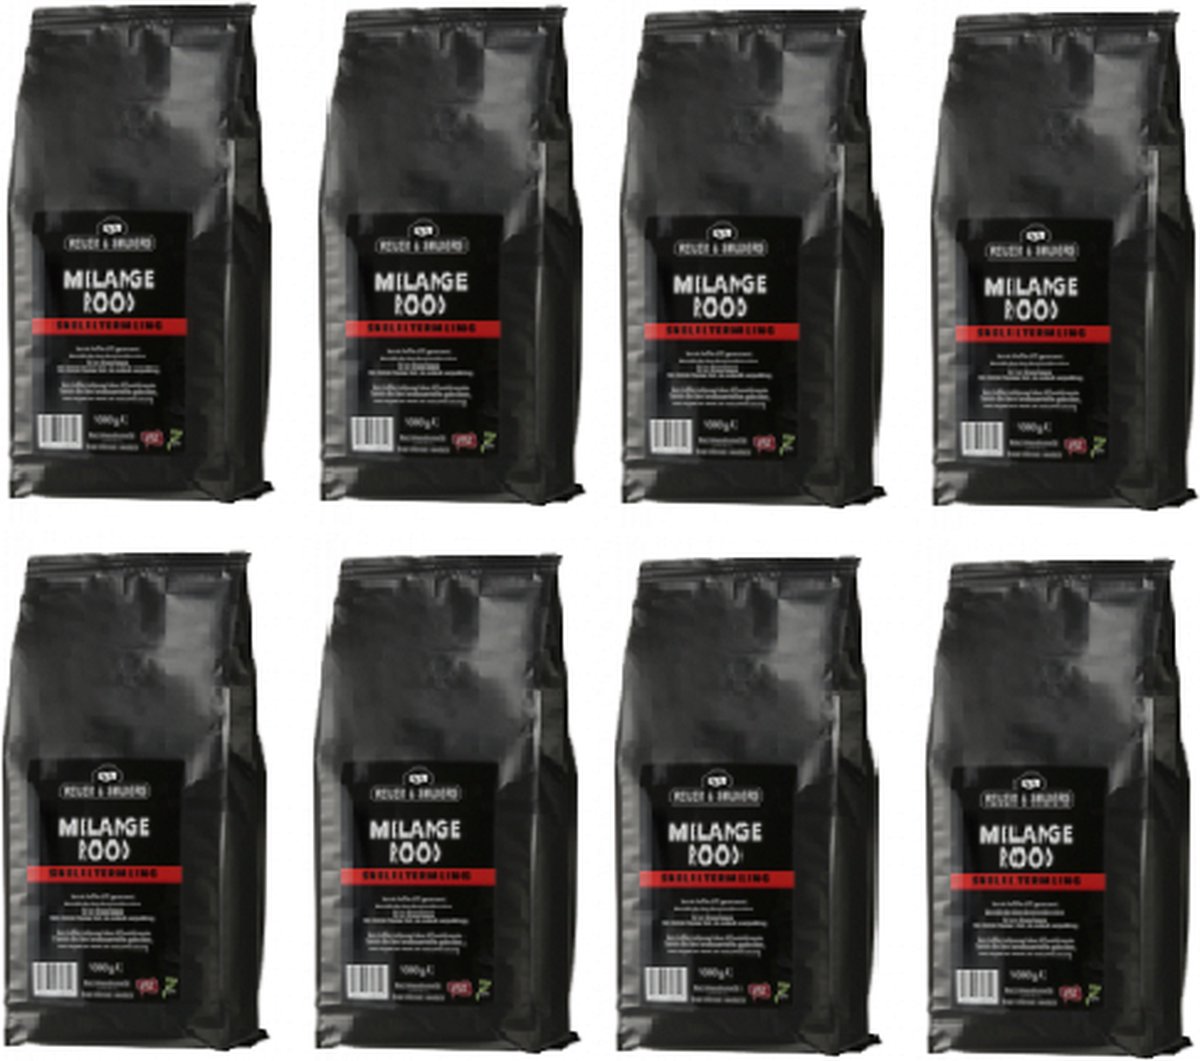 Reuser & Smulders Rood snelfilter koffie UTZ, zak 8X1 kg